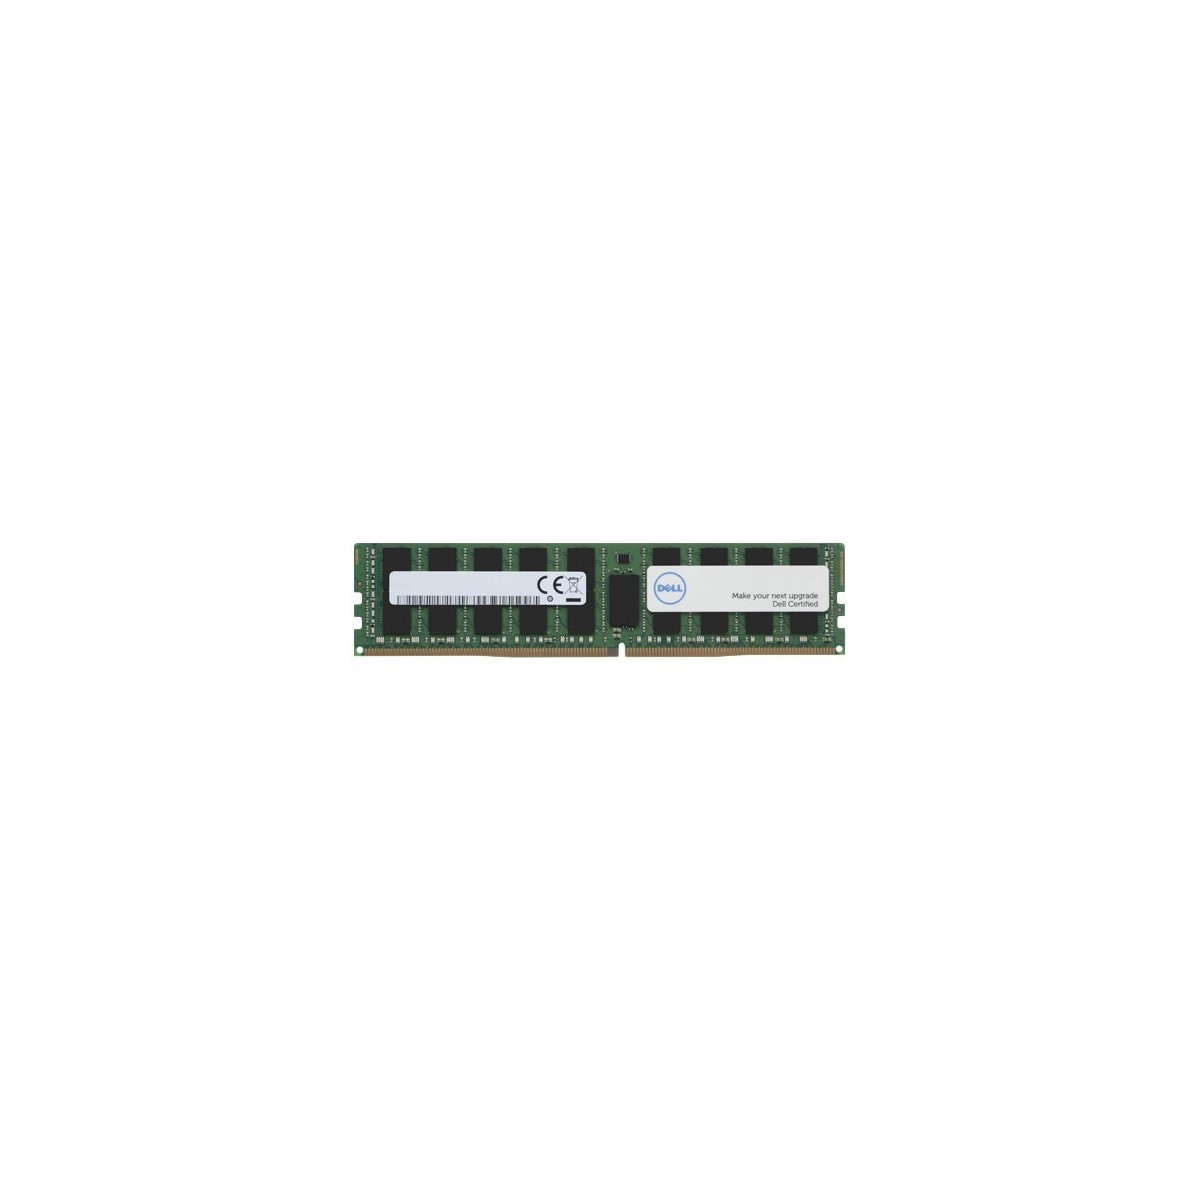 Dell A9654877 - 16 GB - DDR4 - 2400 MHz - Black,Green